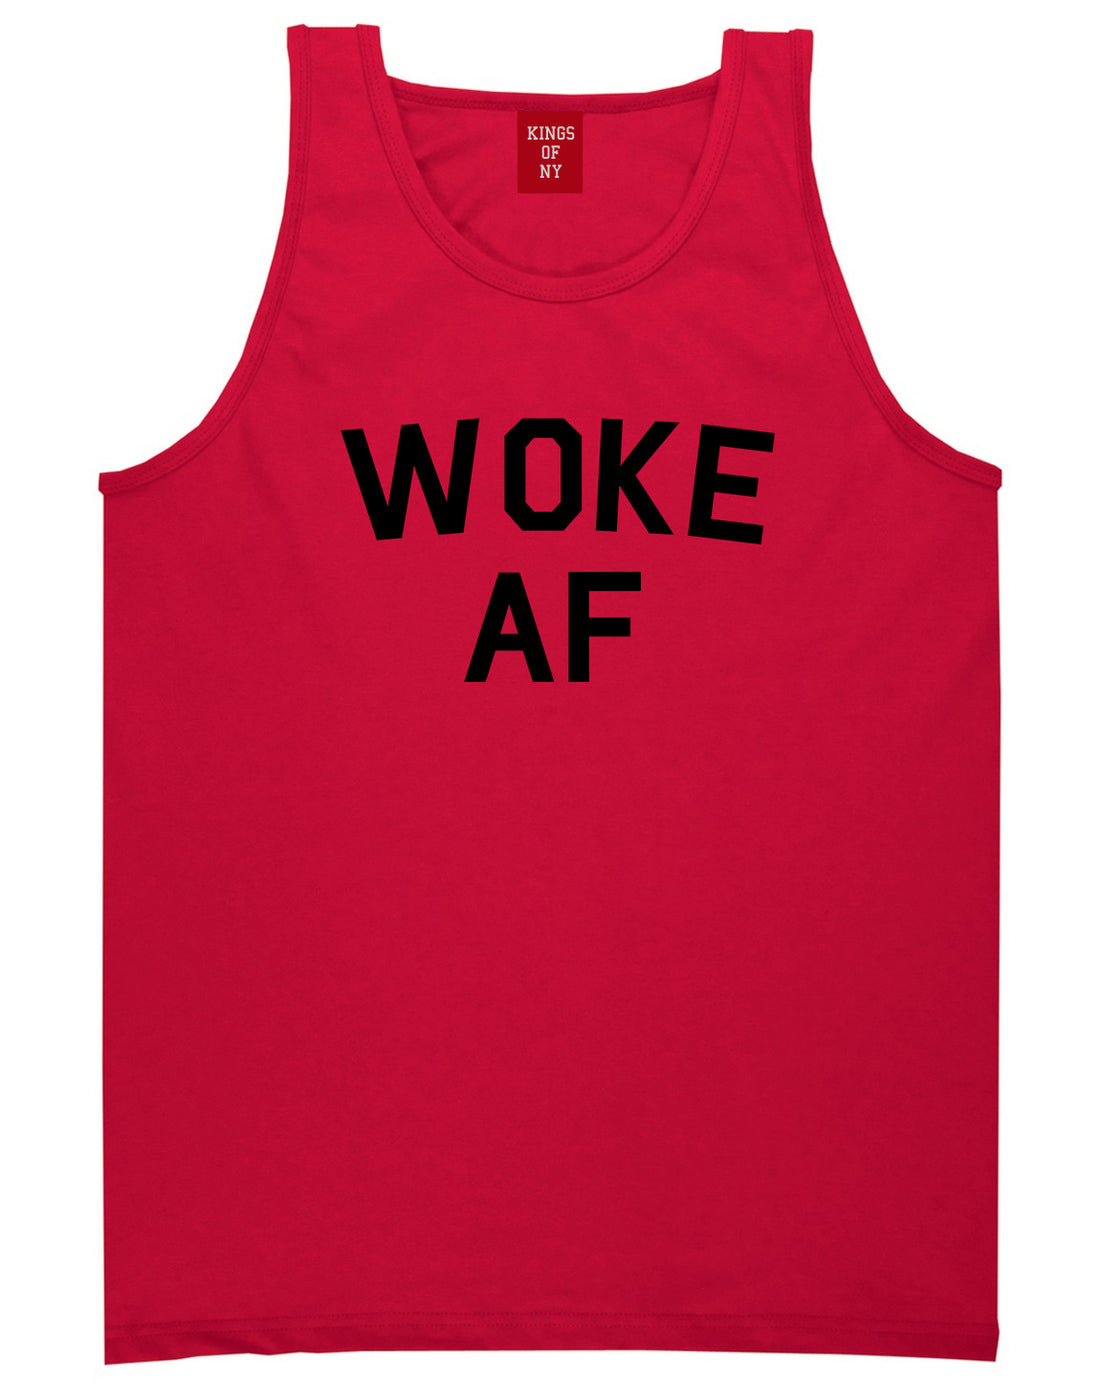 Woke AF Mens Tank Top Shirt Red